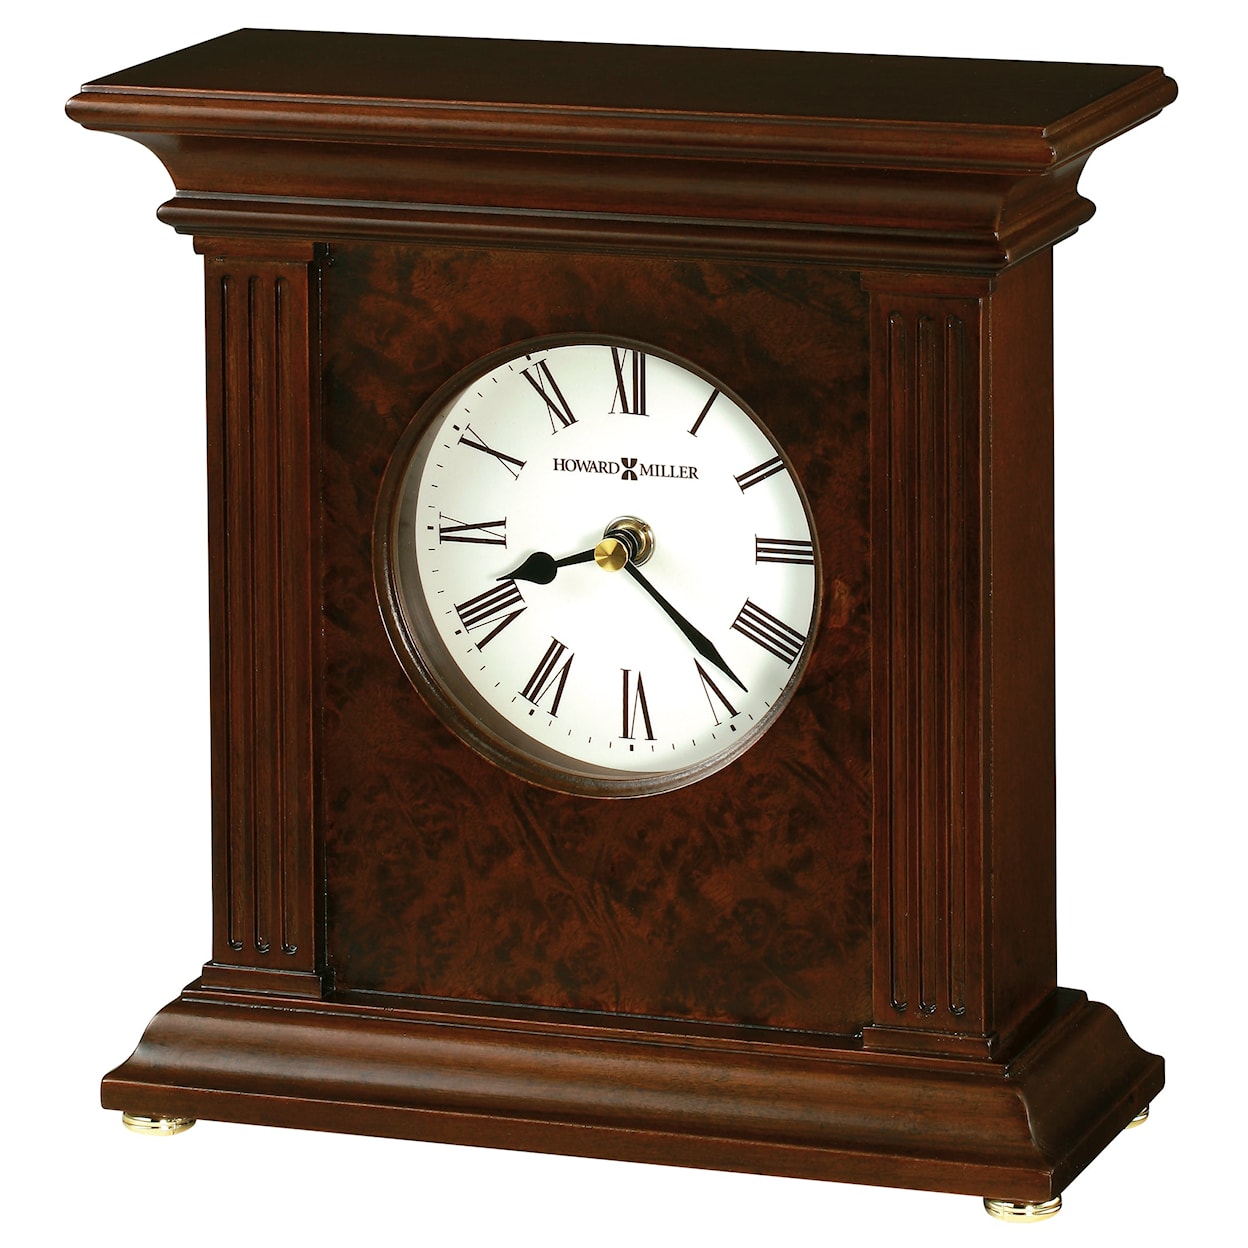 Howard Miller Howard Miller Andover Mantel Clock